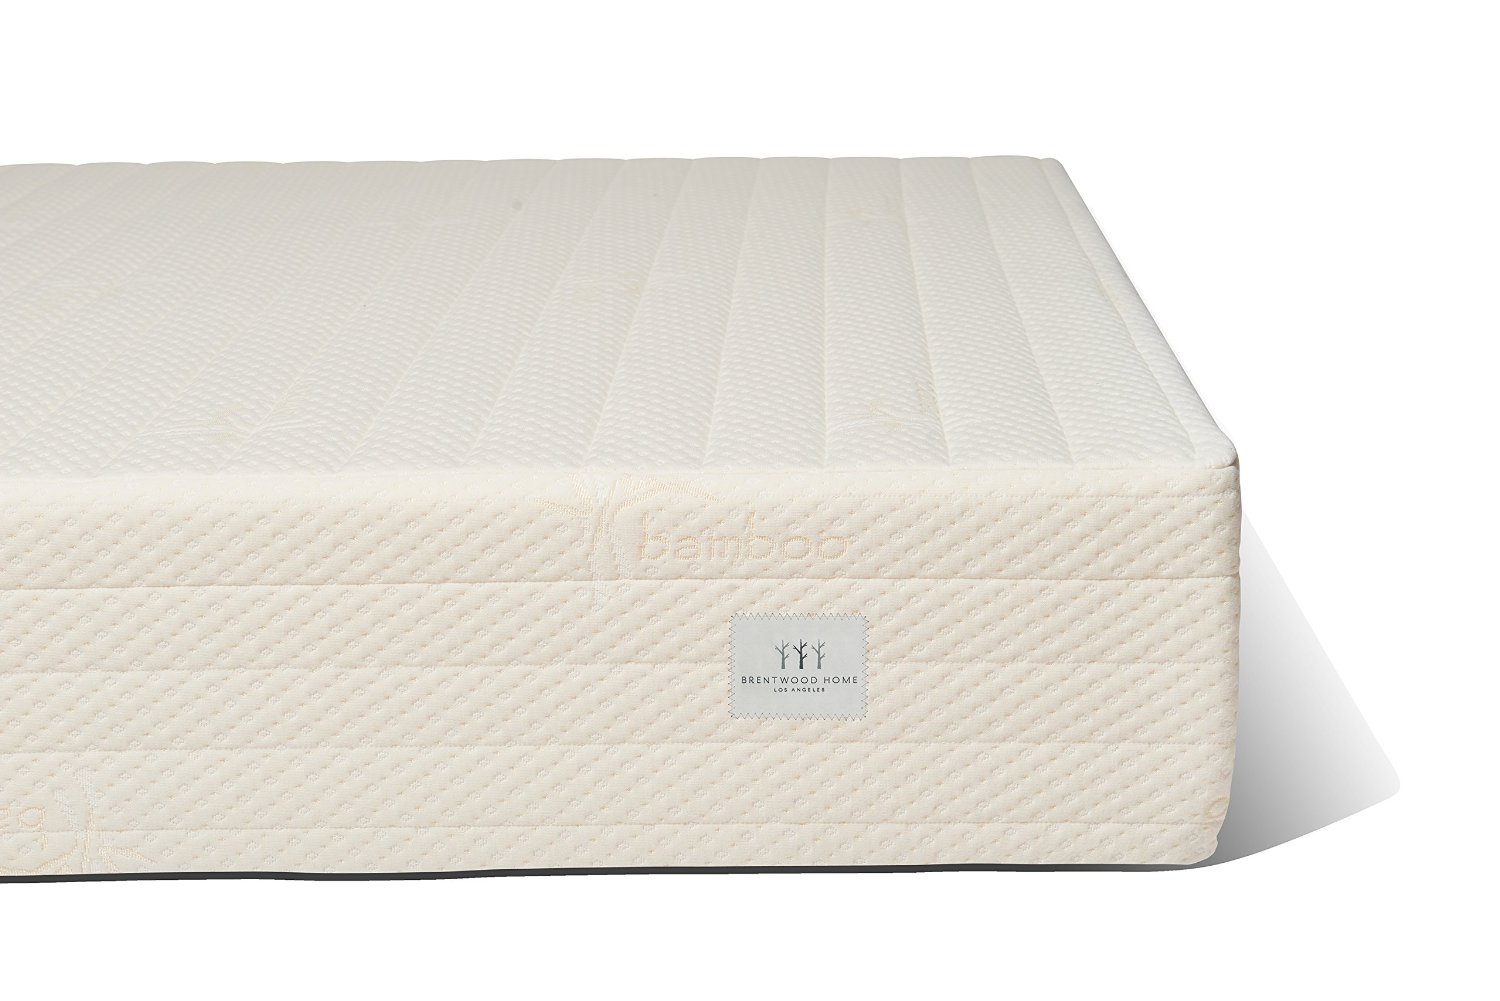 11 inch memory foam mattress